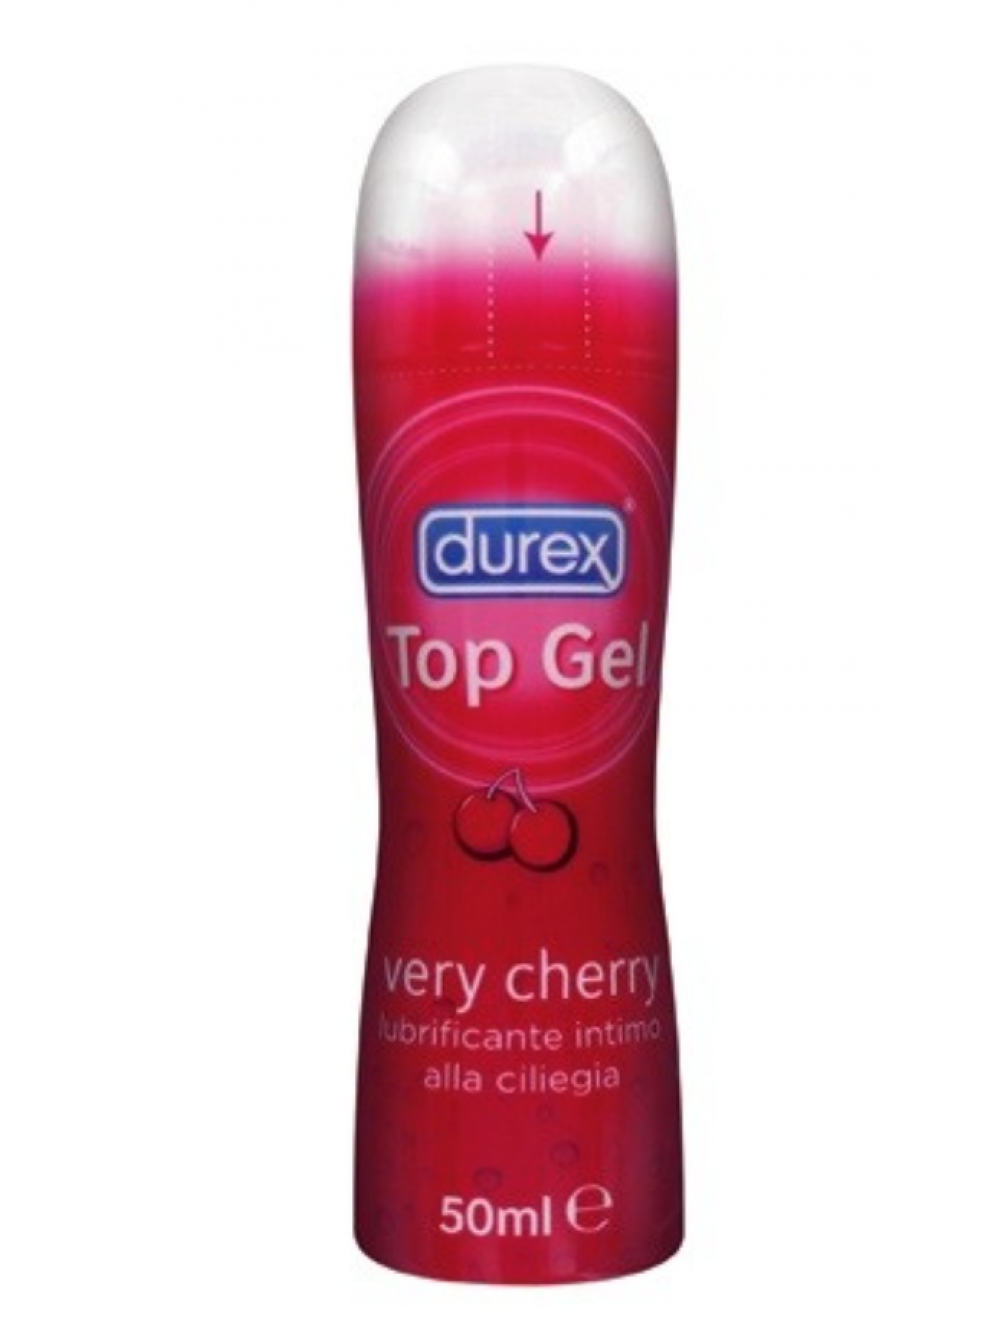 Top Gel very cherry 50 ml